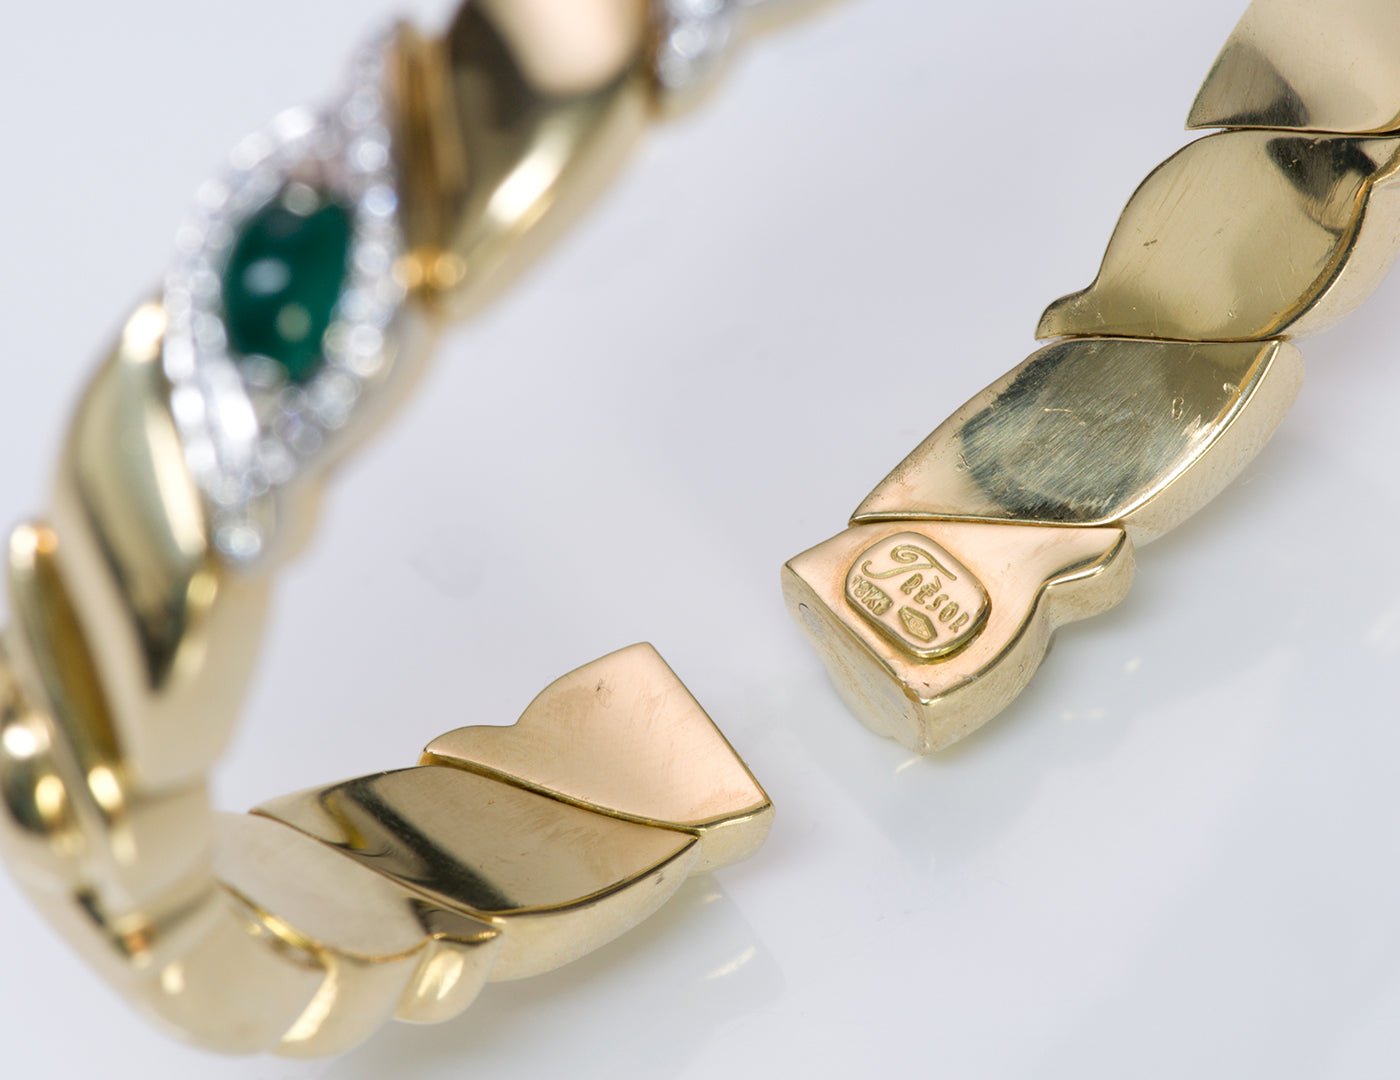 Trèsor 18K Gold Emerald Diamond Bracelet